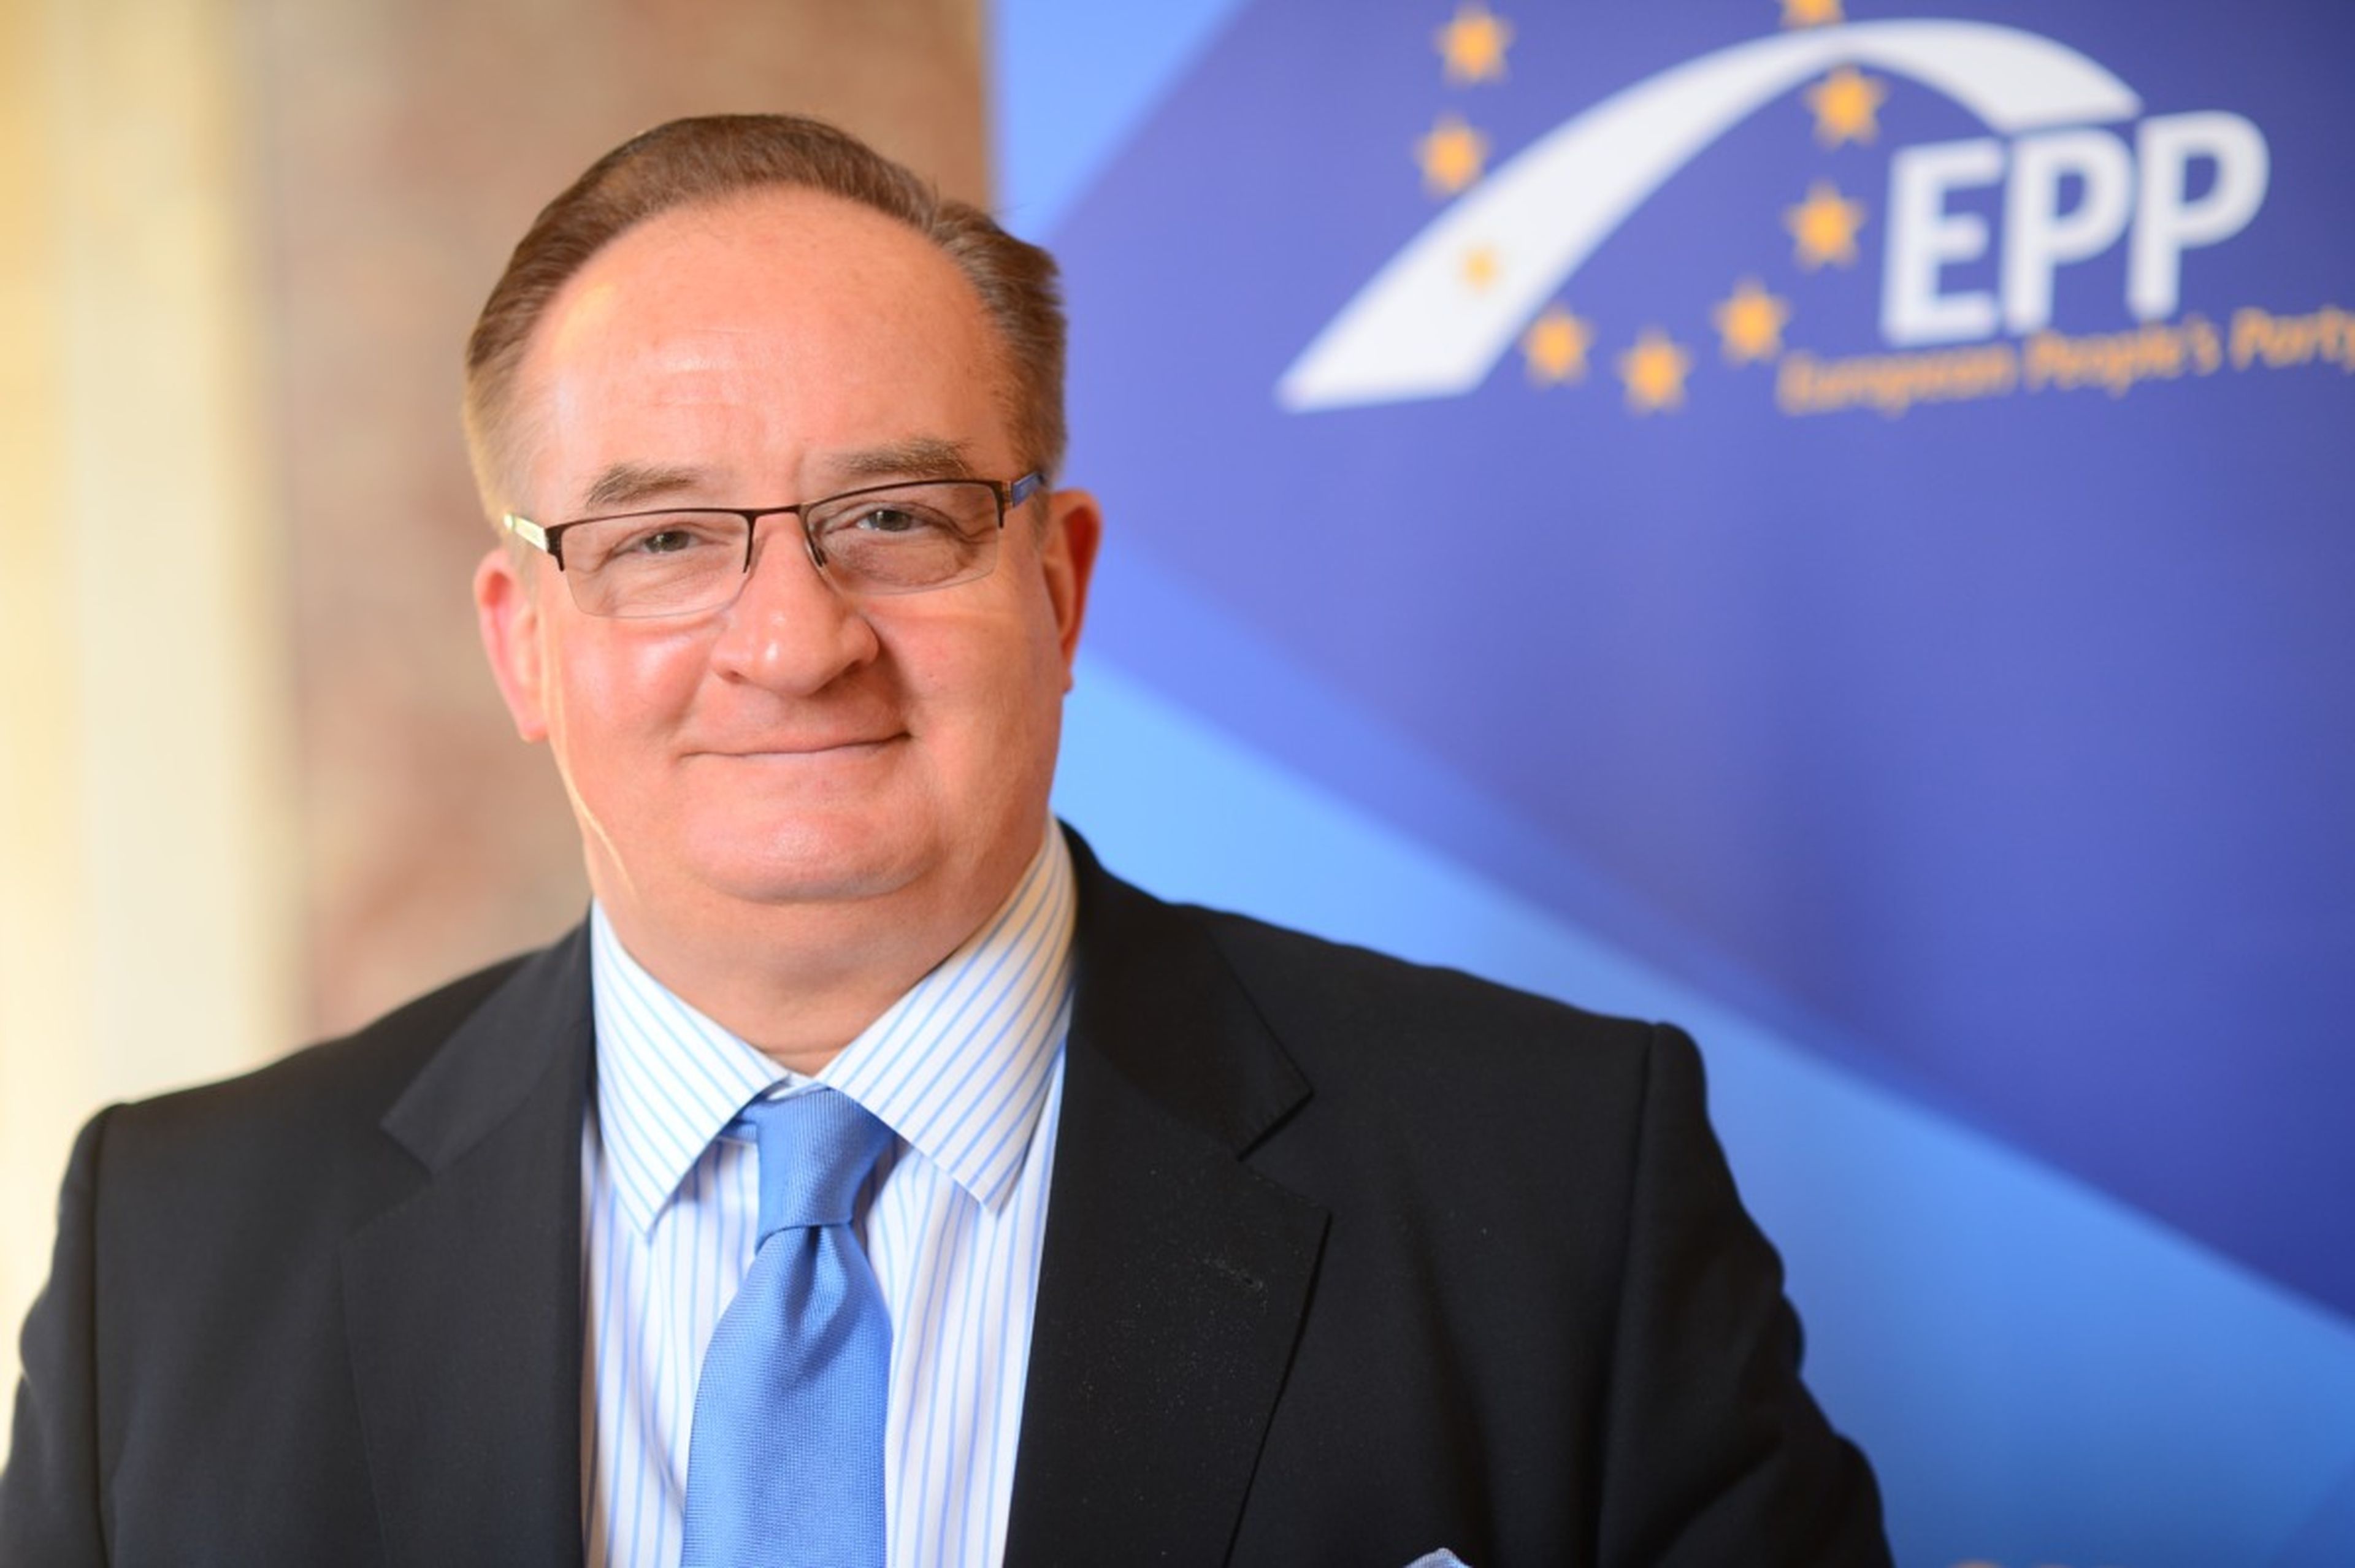 El eurodiputado polaco Jacek Saryusz-Wolski, del partido Ley y Justicia